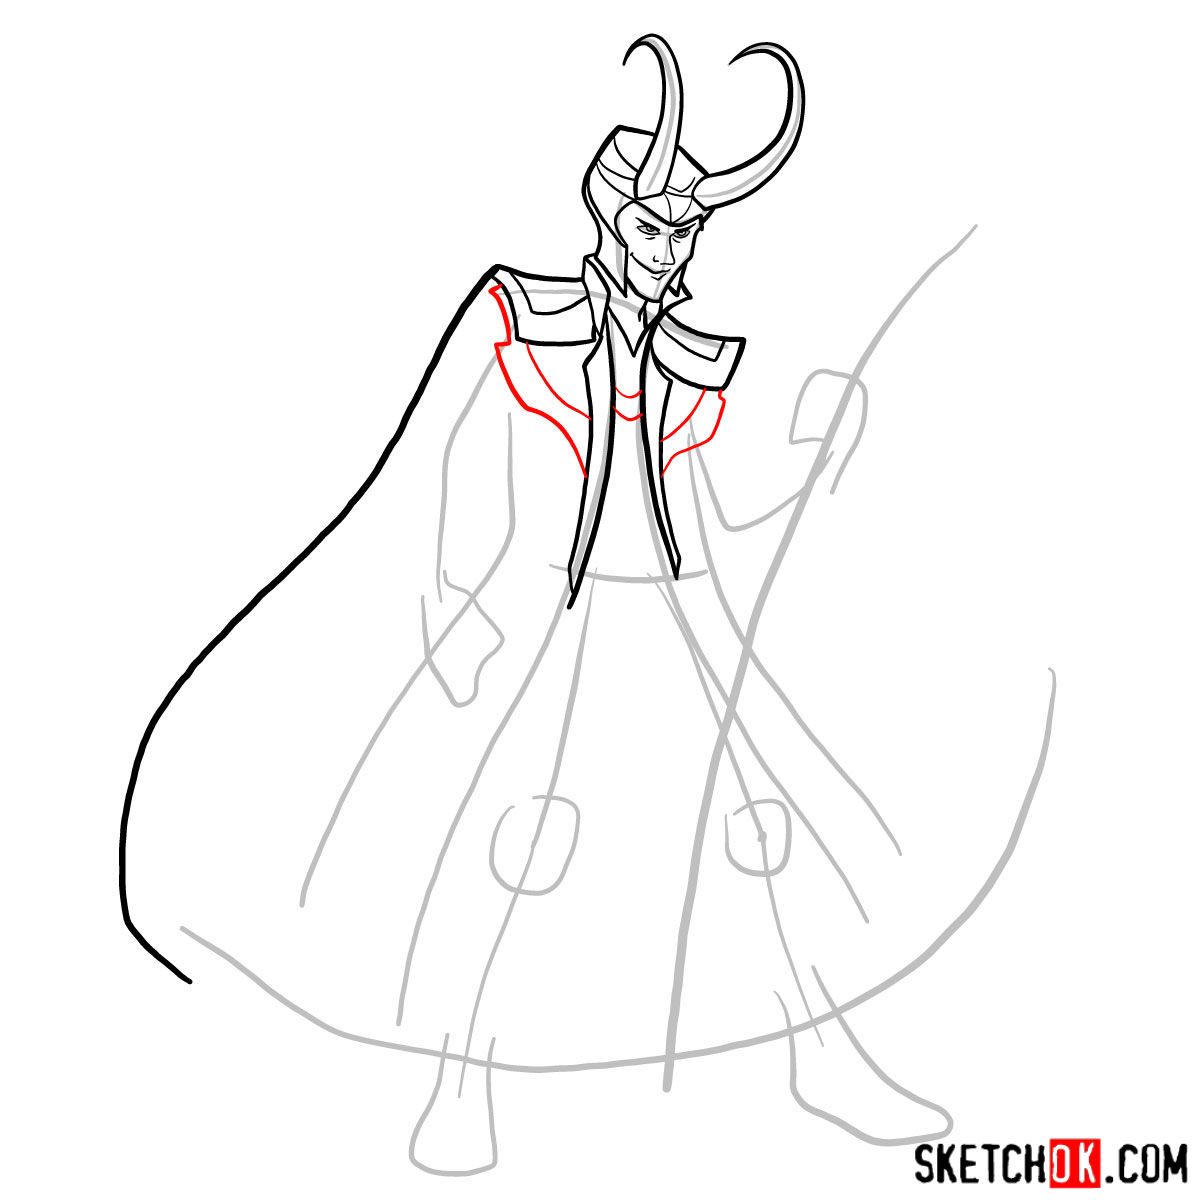 How to draw Loki - Marvel Comics villian - step 08